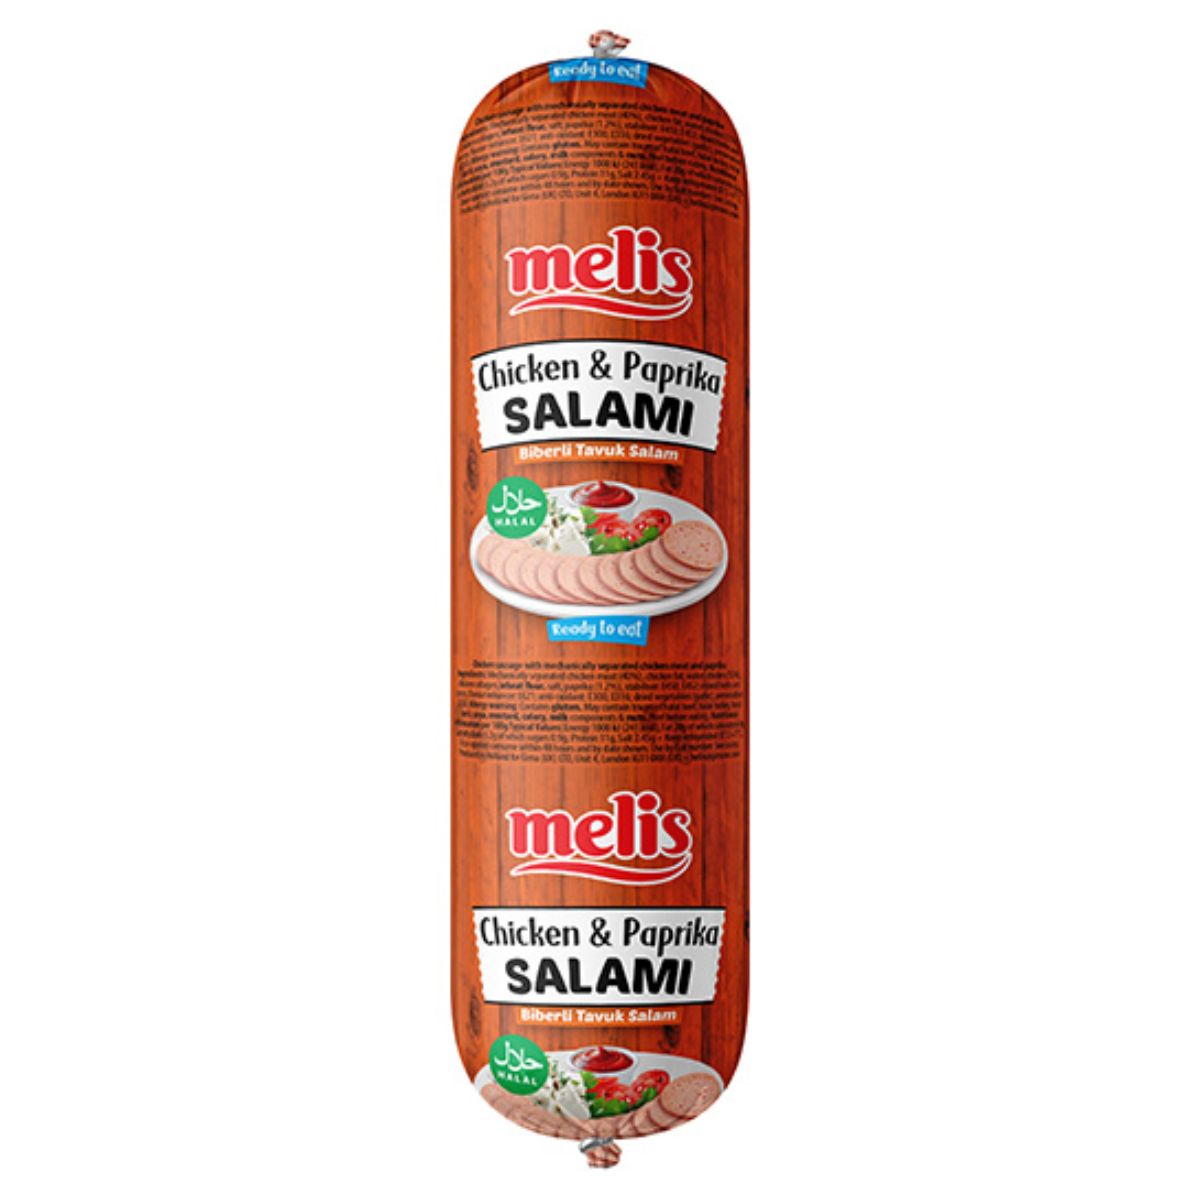 Melis - Hot Chicken Salami (Halal) - 500g's chicken and salami sausage.